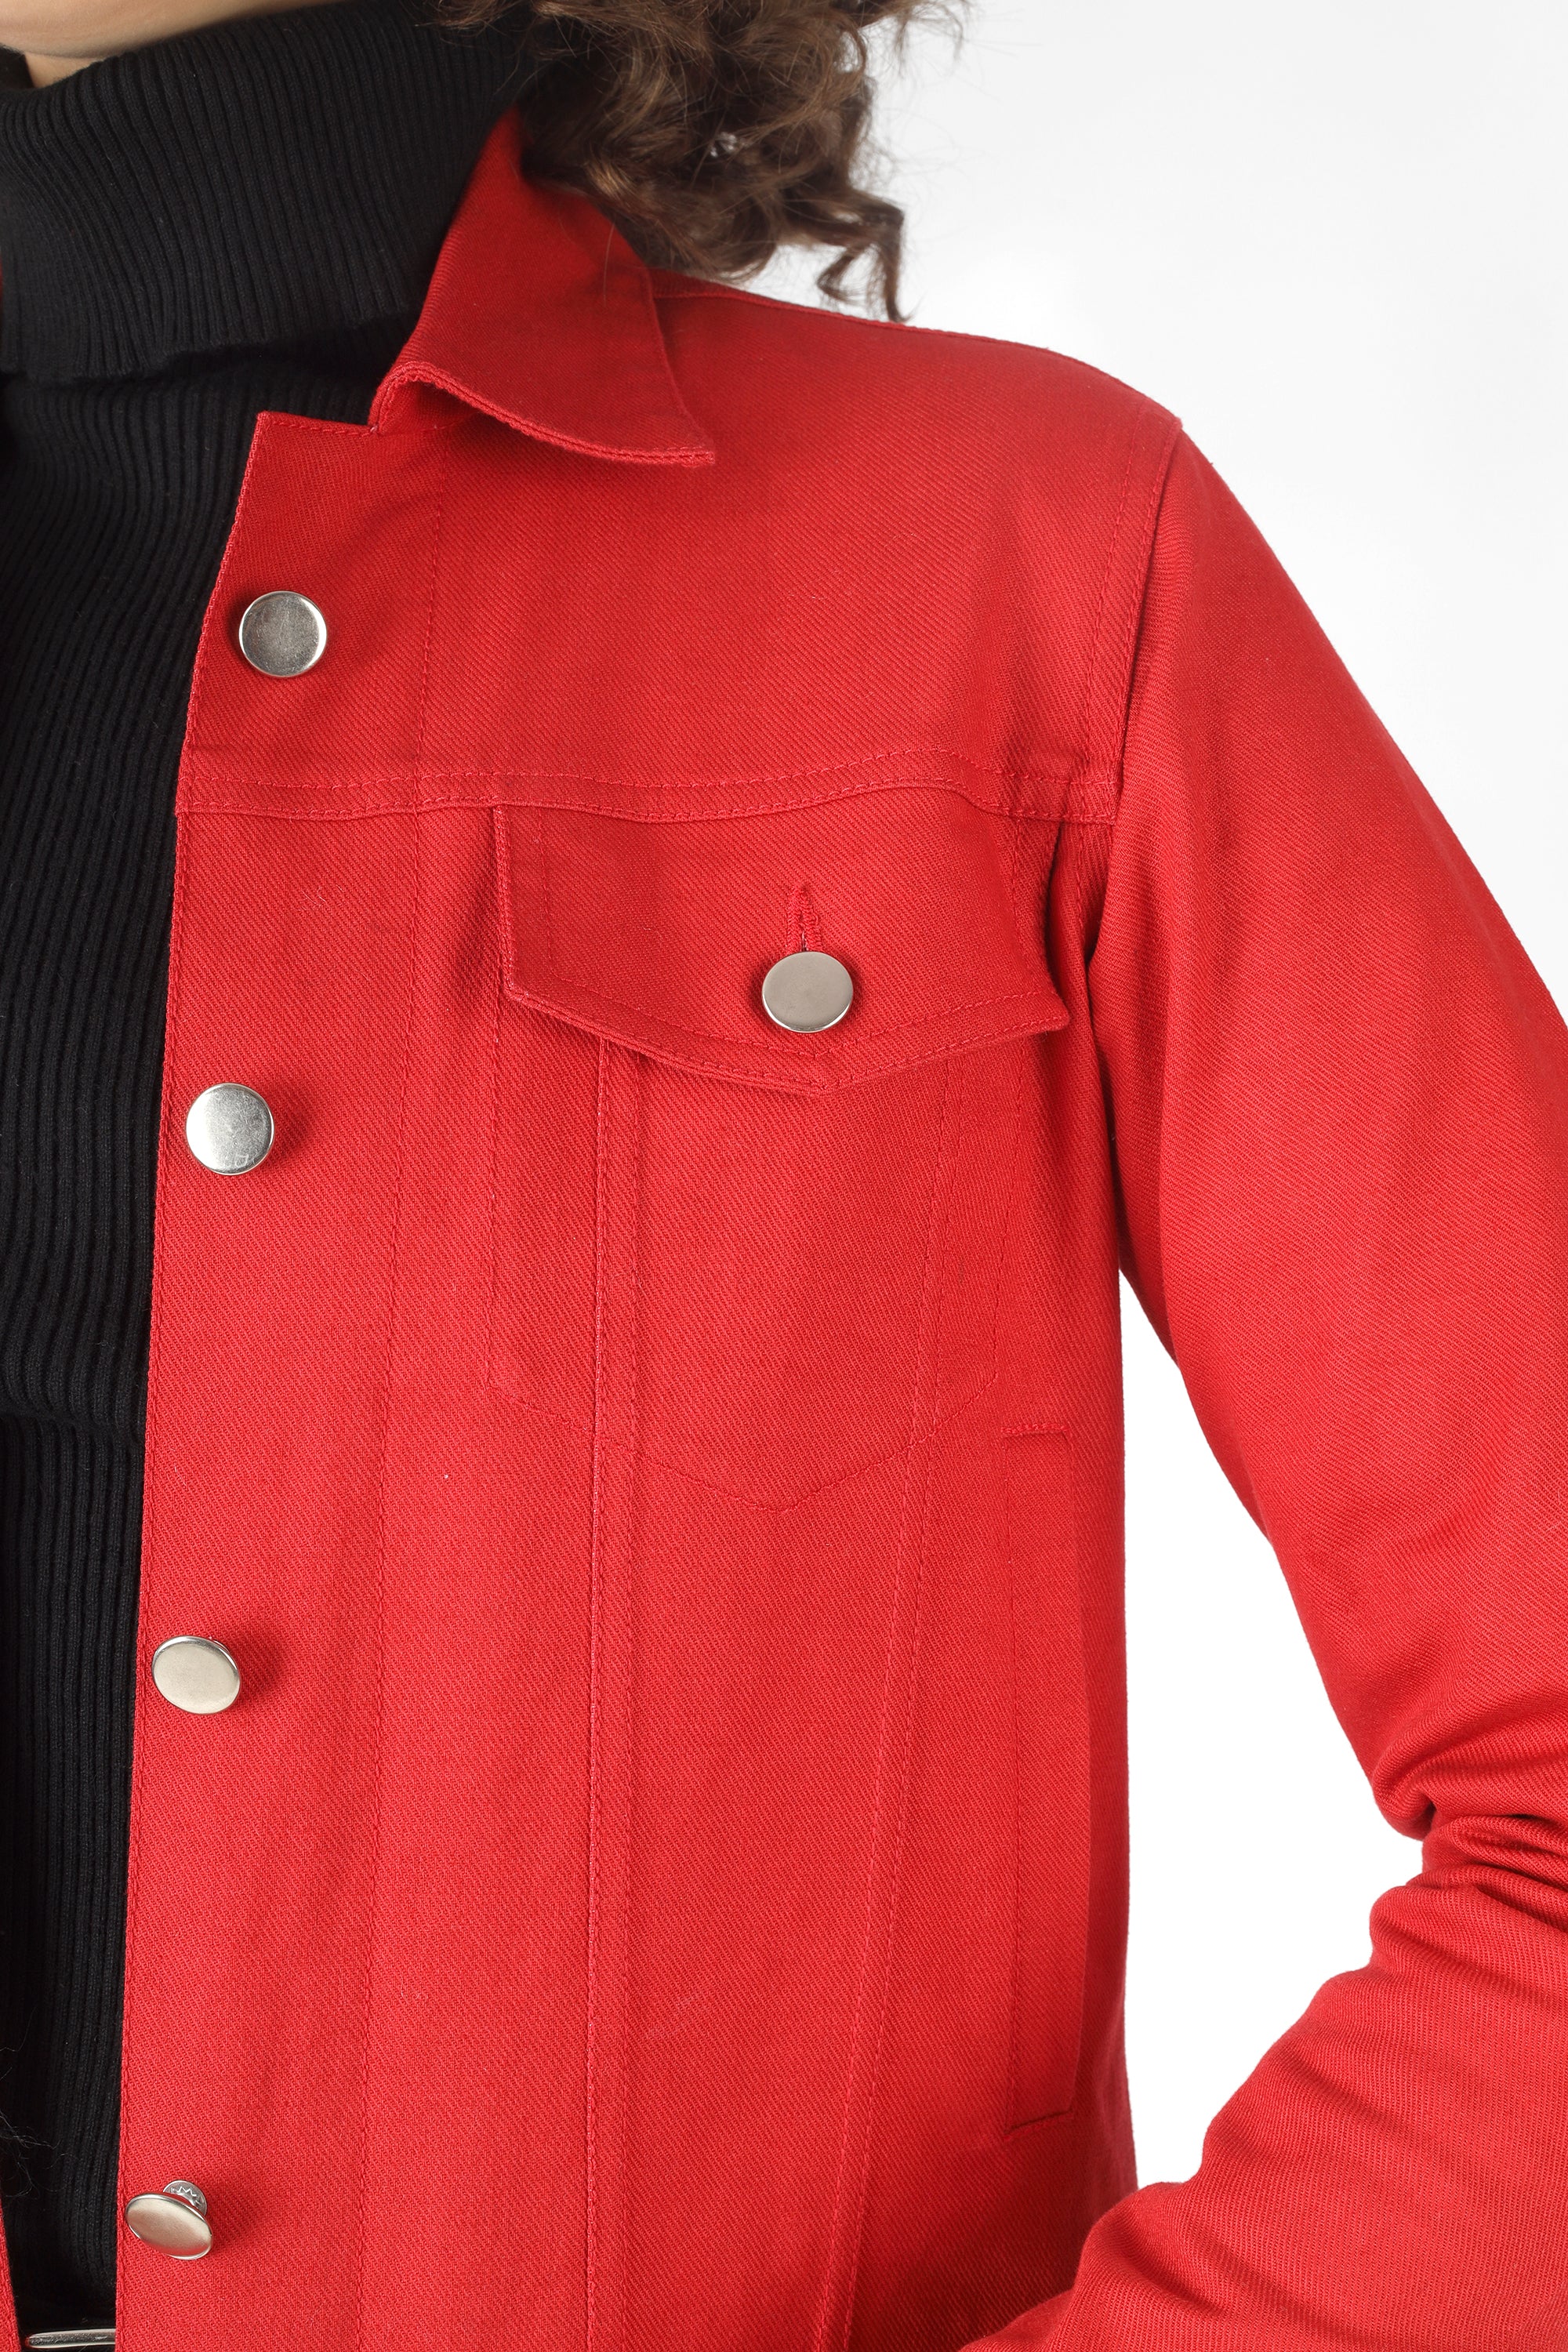 Spring Autumn New Men's Jean Jacket Slim Fit Cotton Denim Jacket Red White  Black Ripped Hole Jean Coats Men Outwear Plus size